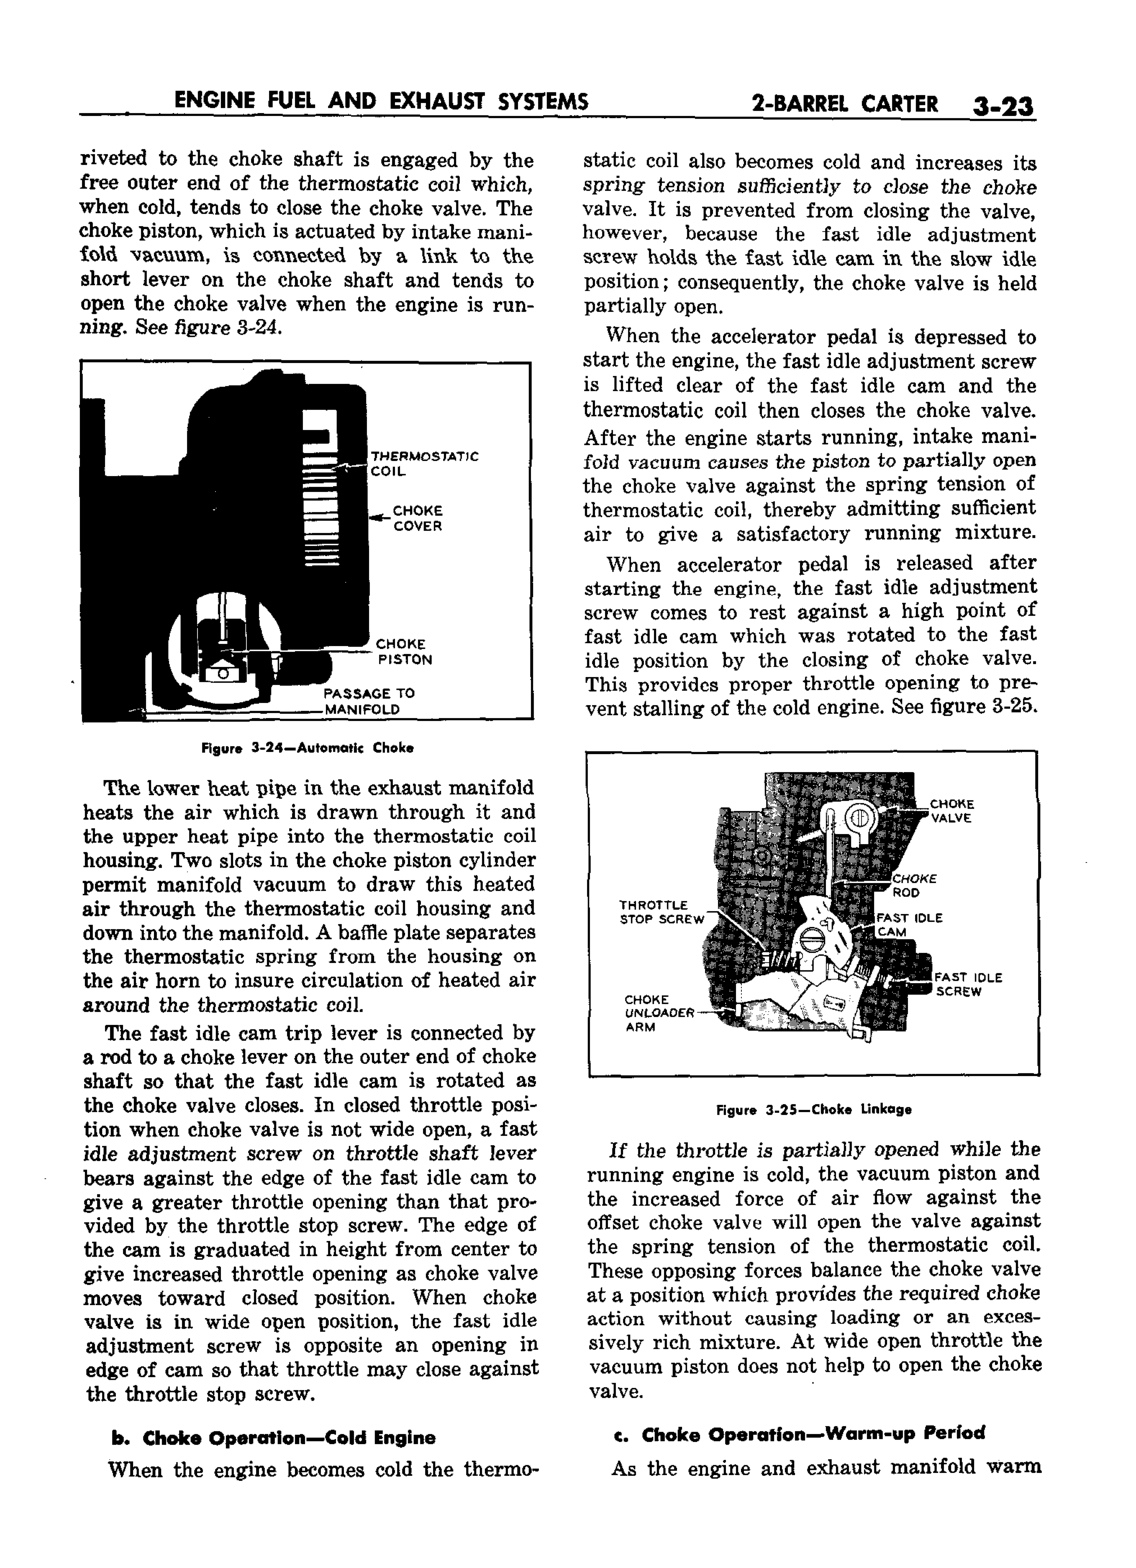 n_04 1959 Buick Shop Manual - Engine Fuel & Exhaust-023-023.jpg